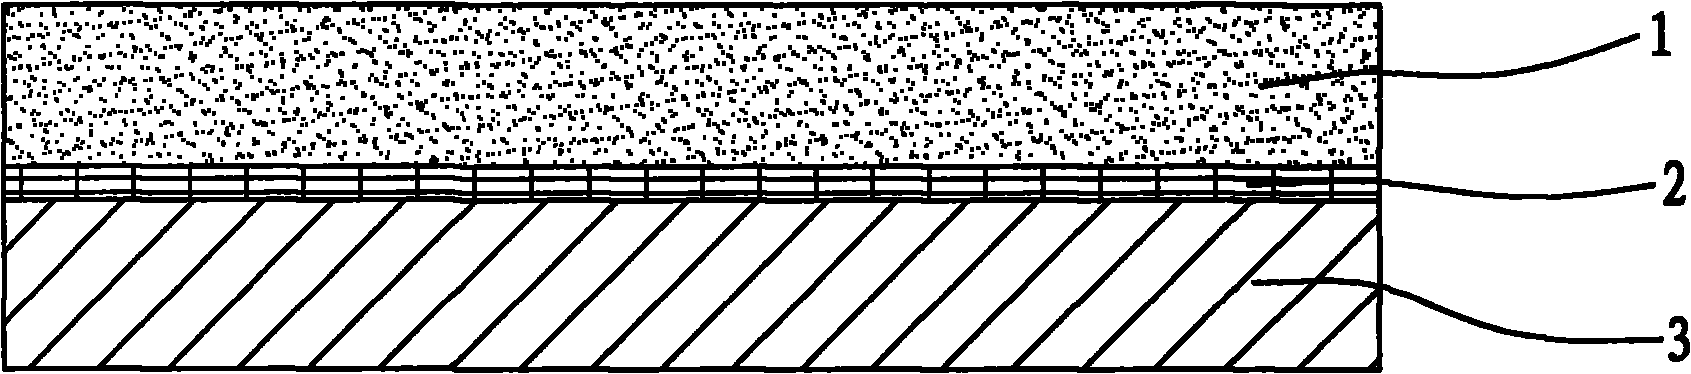 Composite micropore filter material